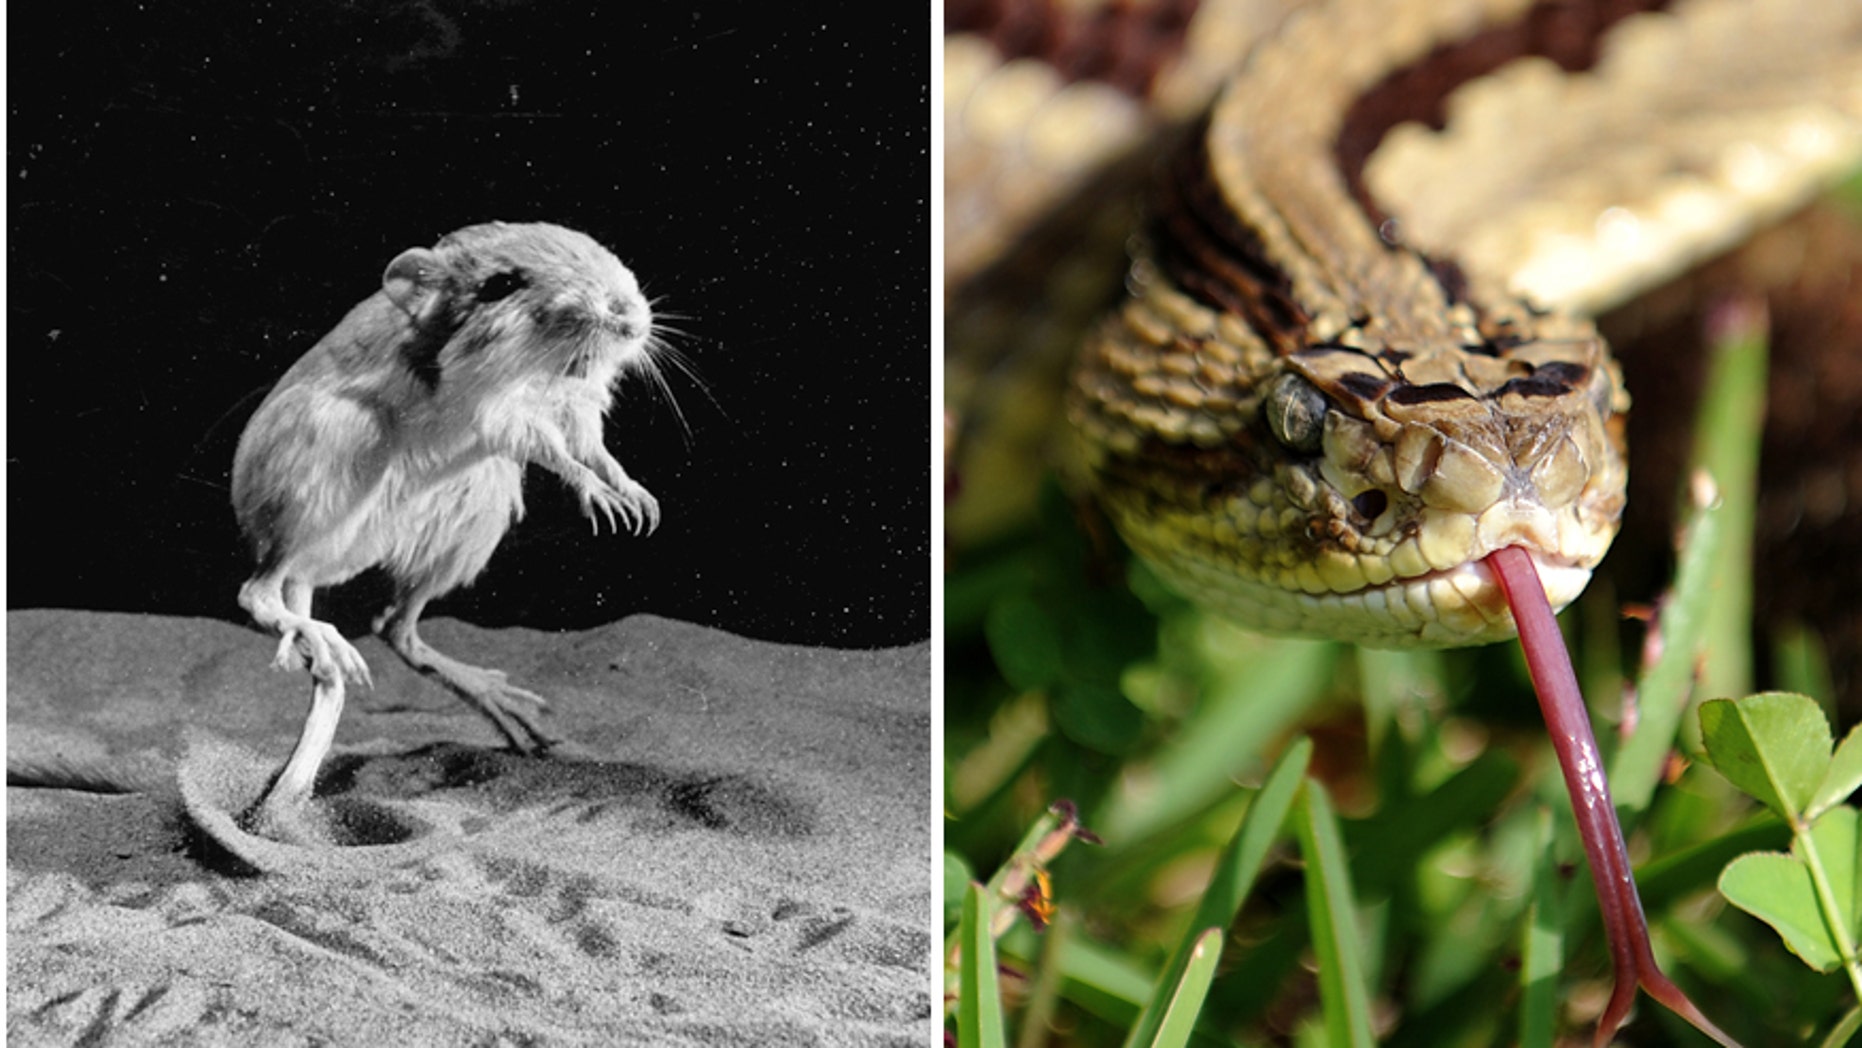 File photos - Kangaroo rat in mid-jump/A poisonous neotropical rattlesnake (Crotalus simus)